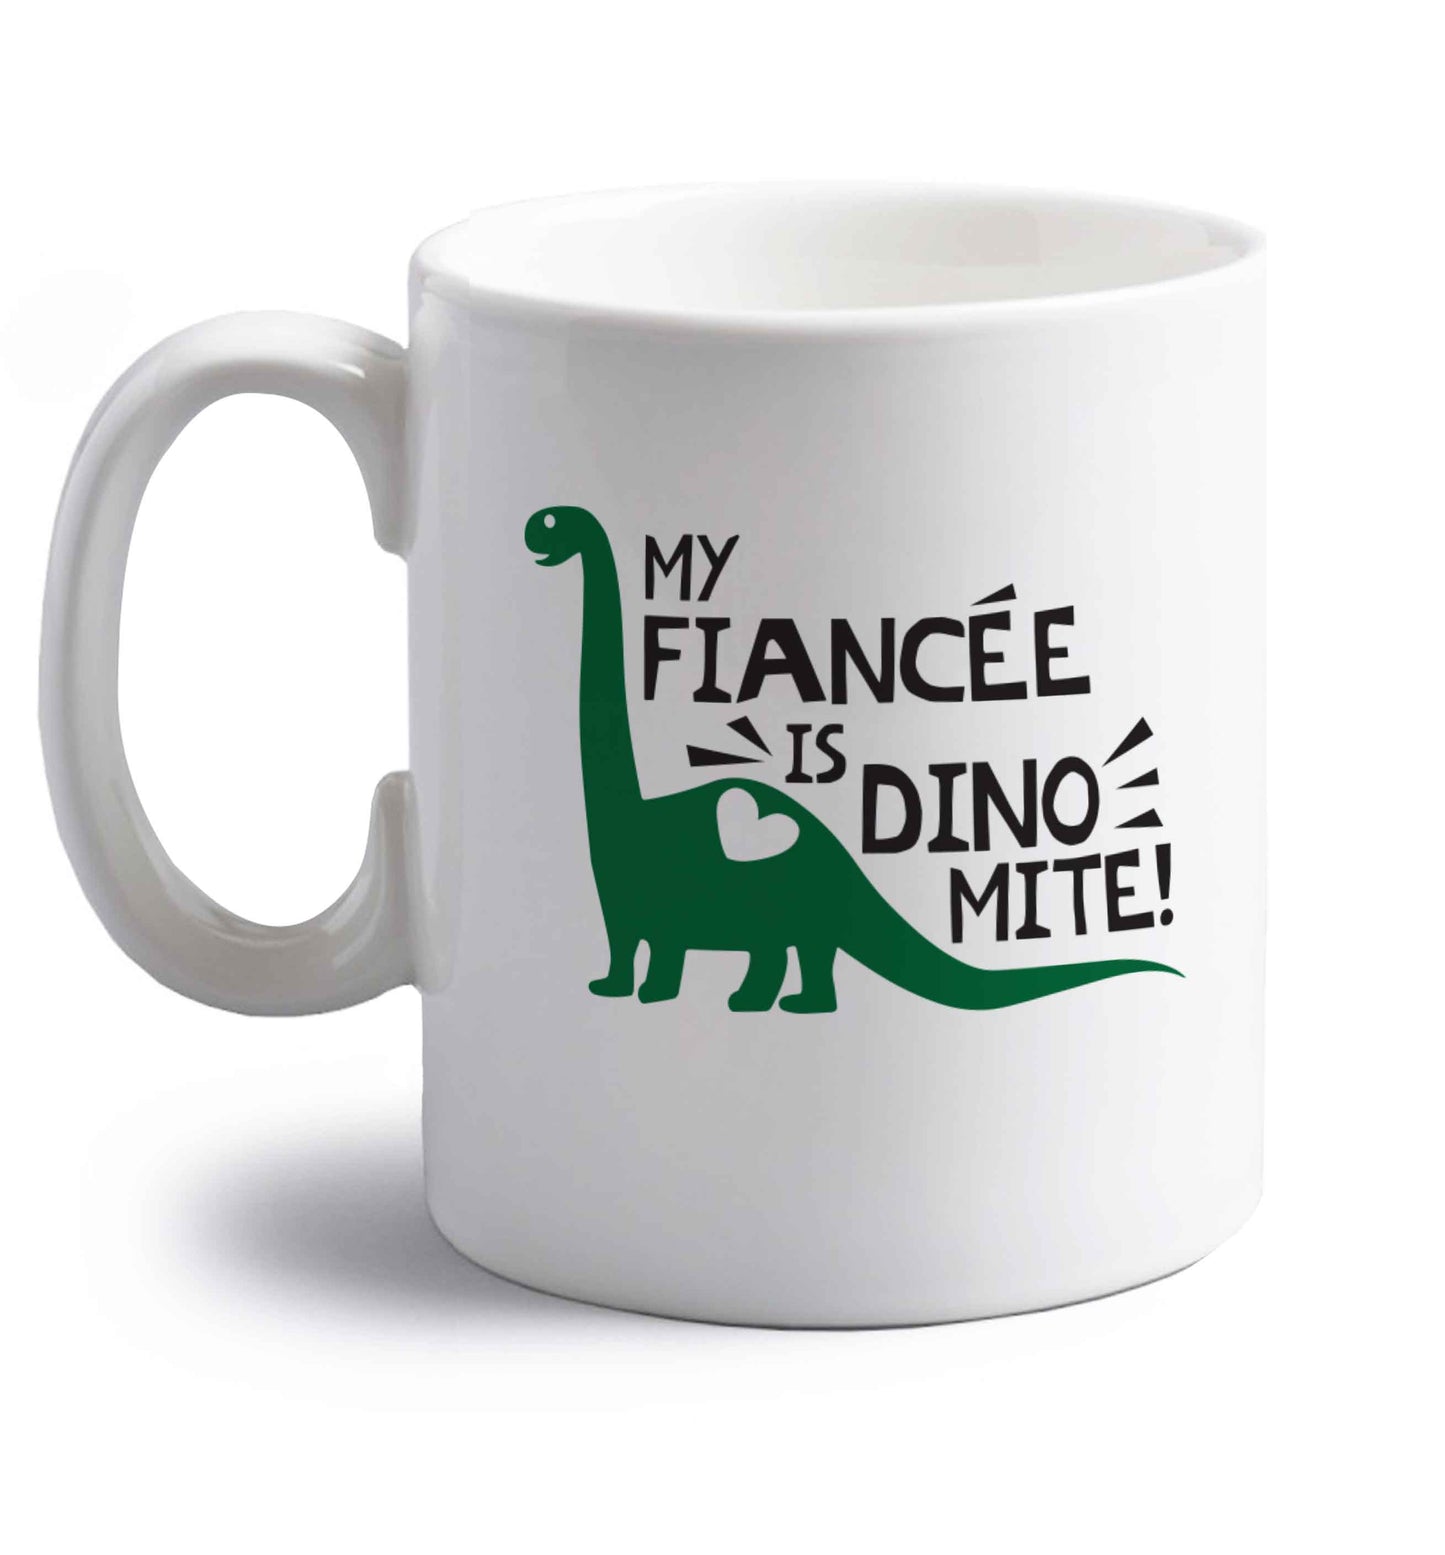 My fiancee is dinomite! right handed white ceramic mug 